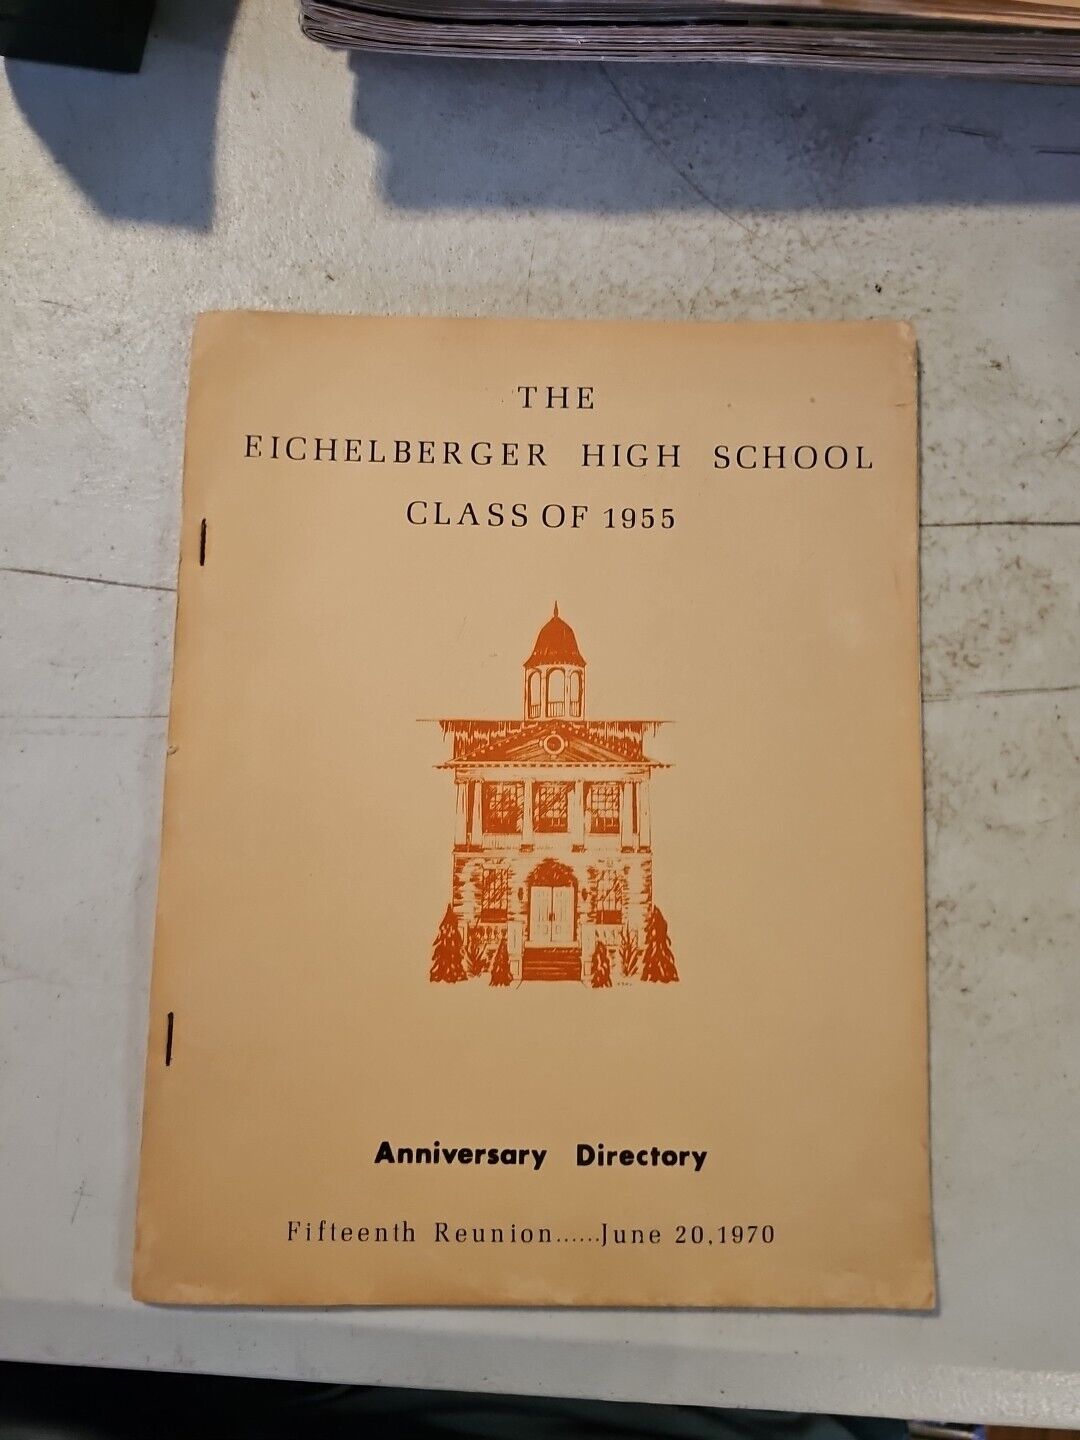  Eichelberger High School Hanover, Pennsylvania Class Of 1955 15th Anniversary 